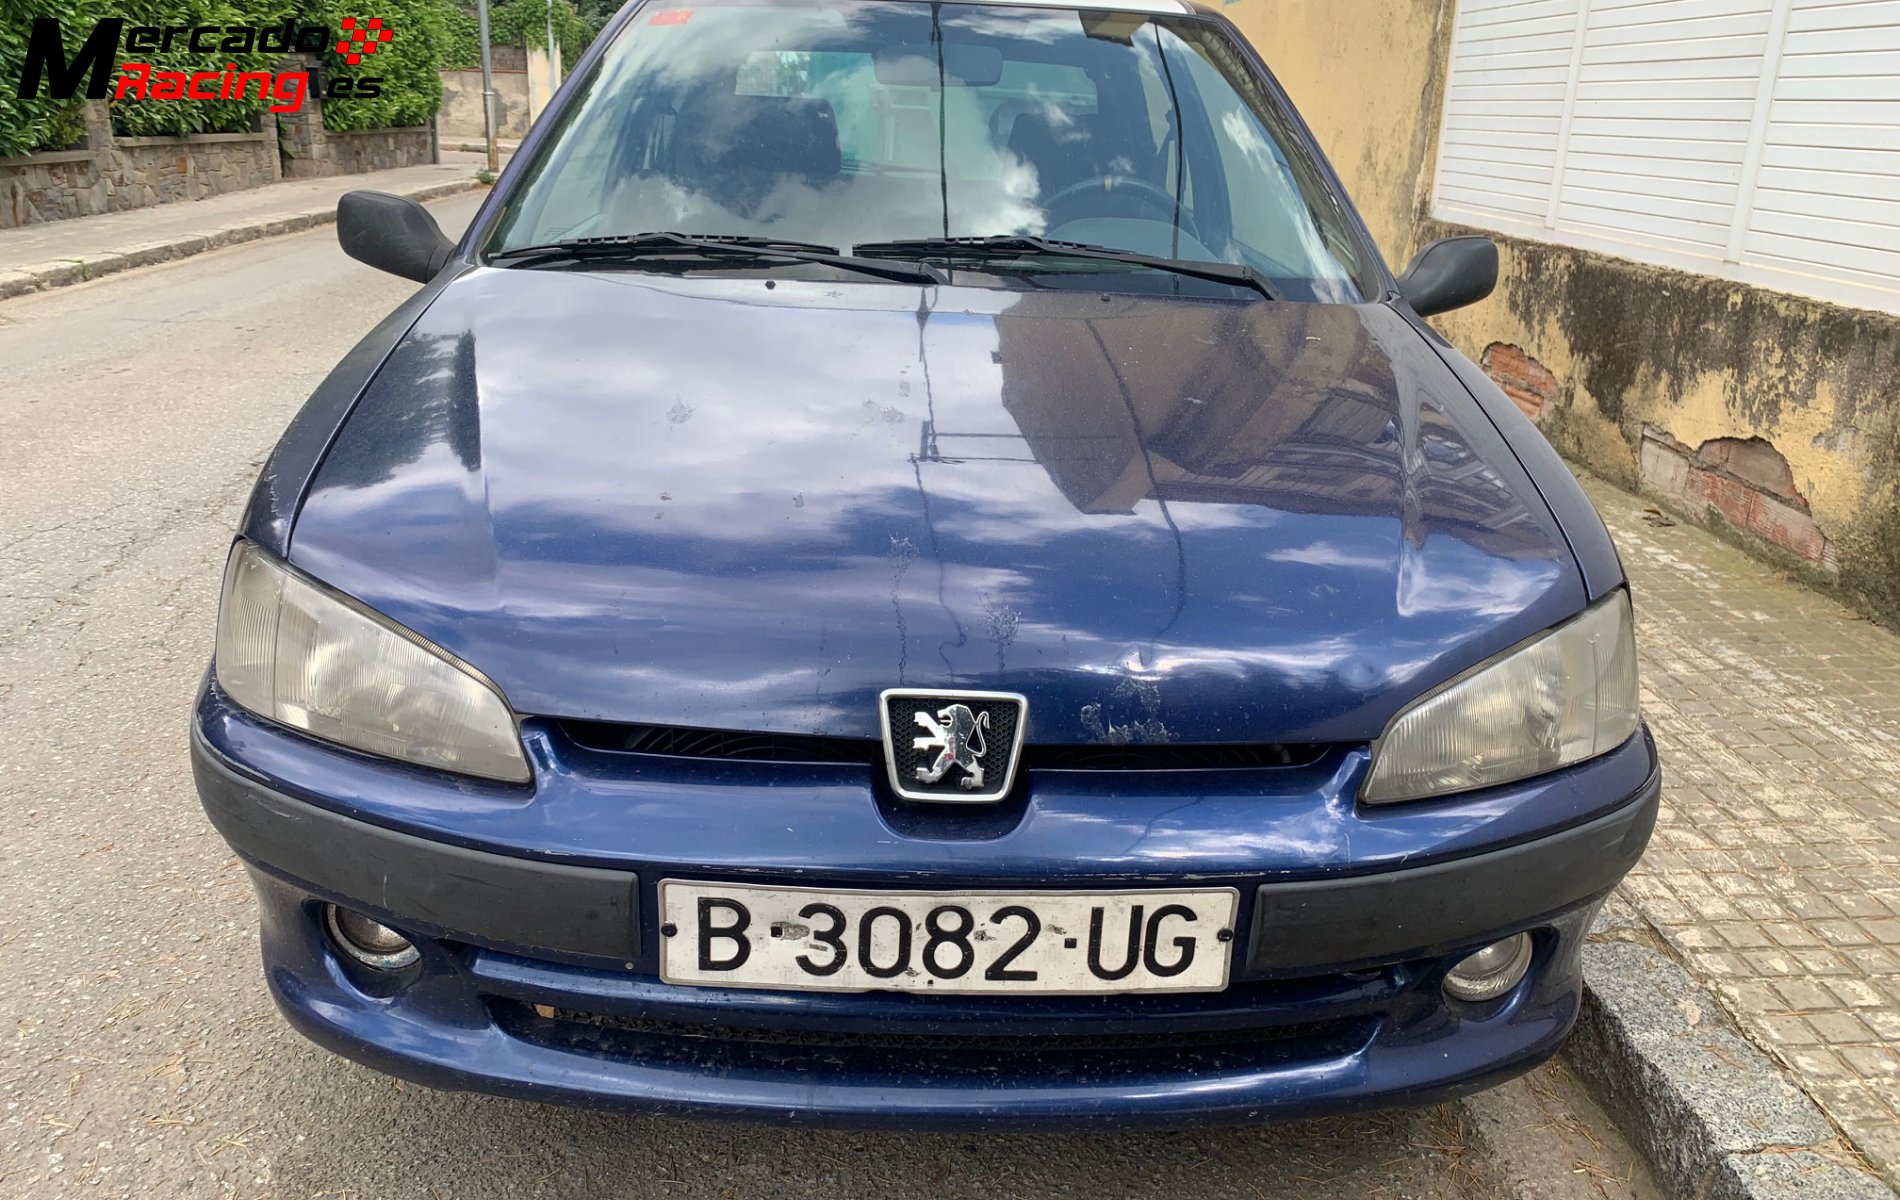 Peugeot 106 sport 1998